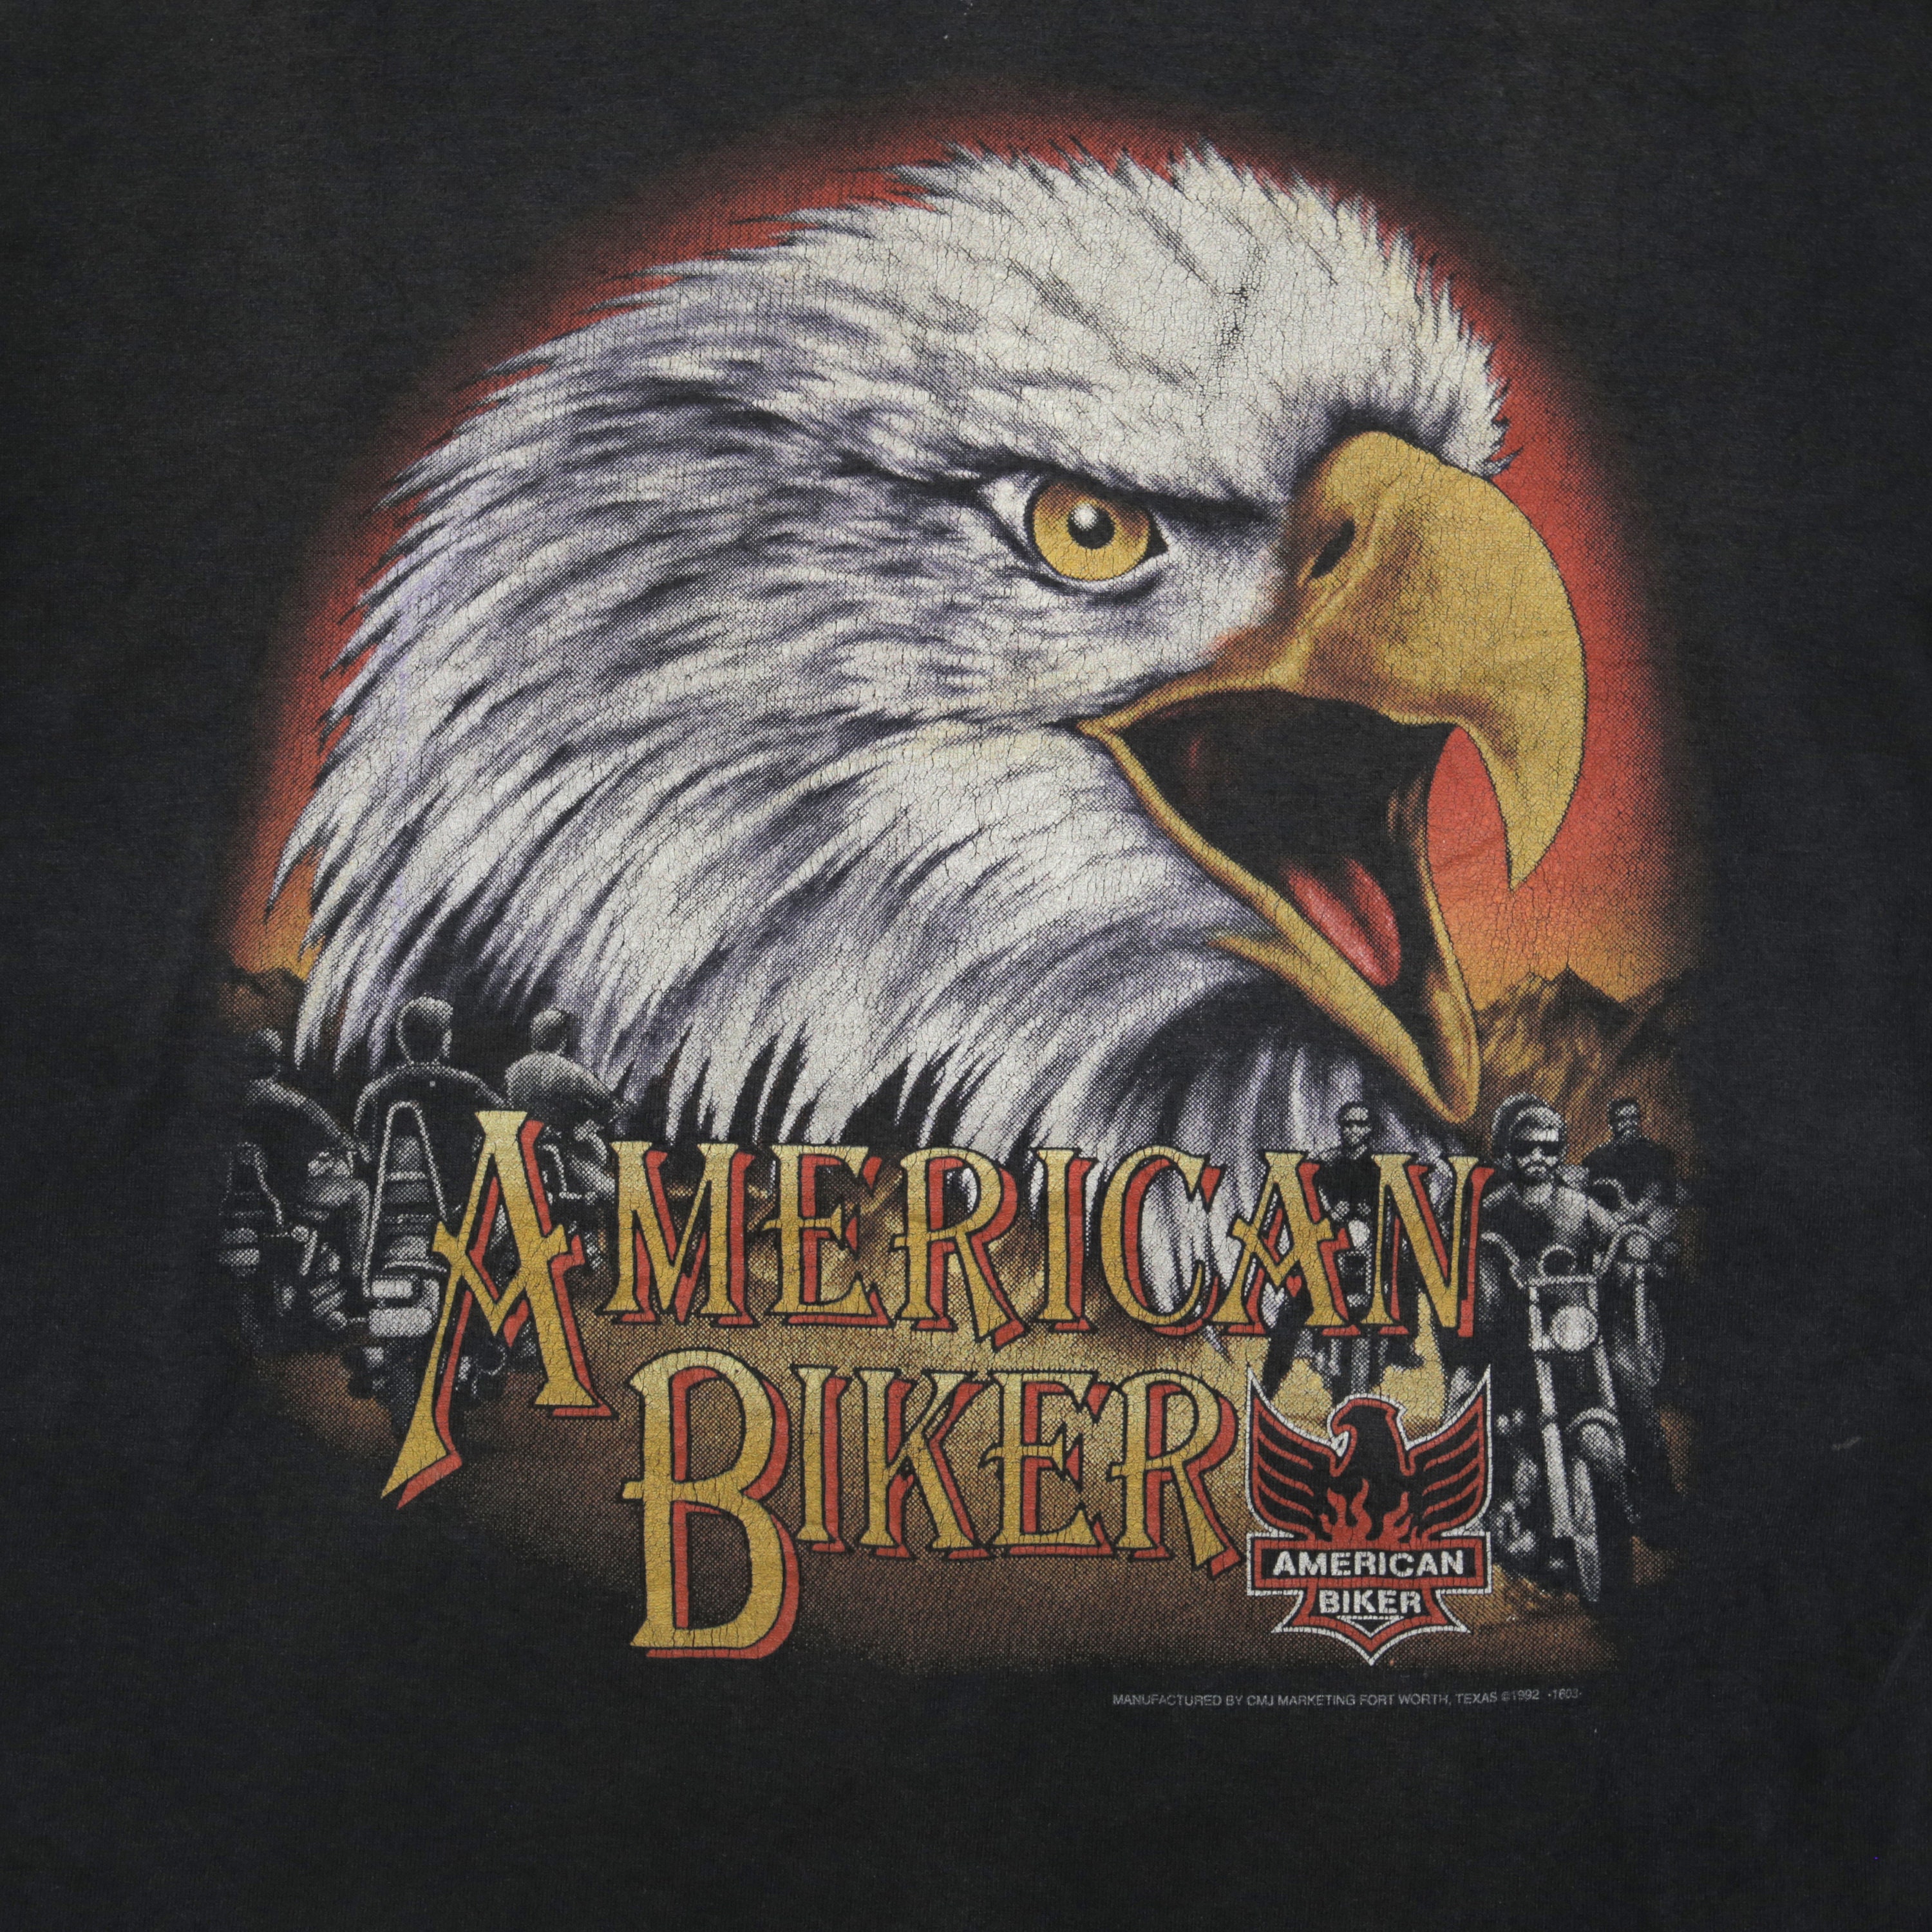 VintageVintage American Legends Motorcycle T-Shirt  Animal Bald Eagle Graphic  90s 2000  Streetwear  Retro Style